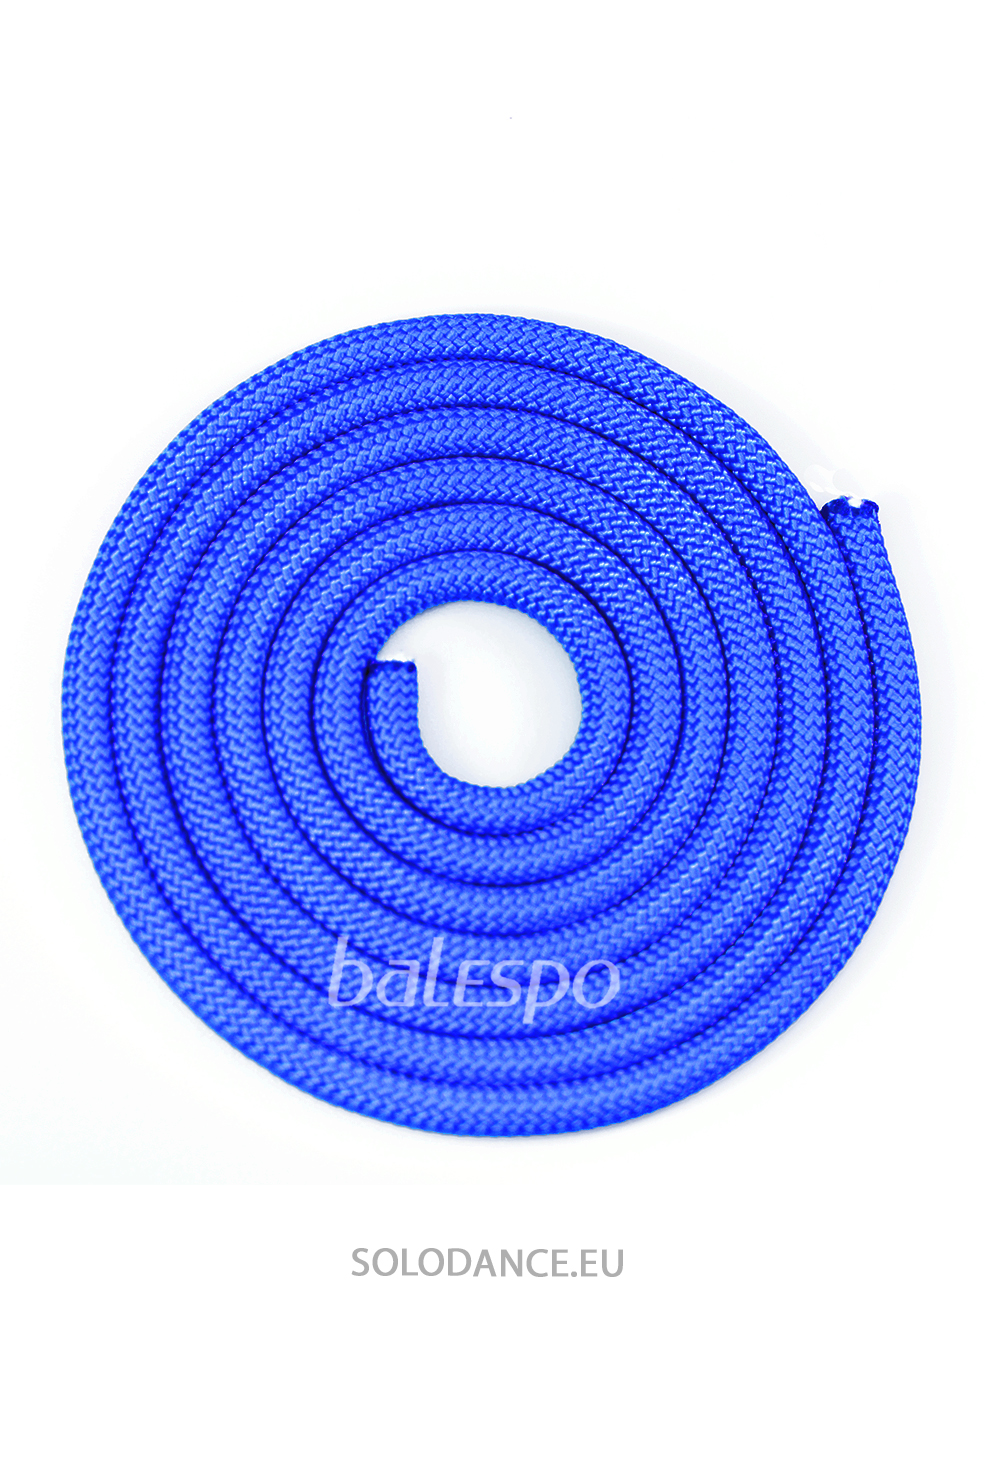 Gymnastic rope BALESPO 3 m blue